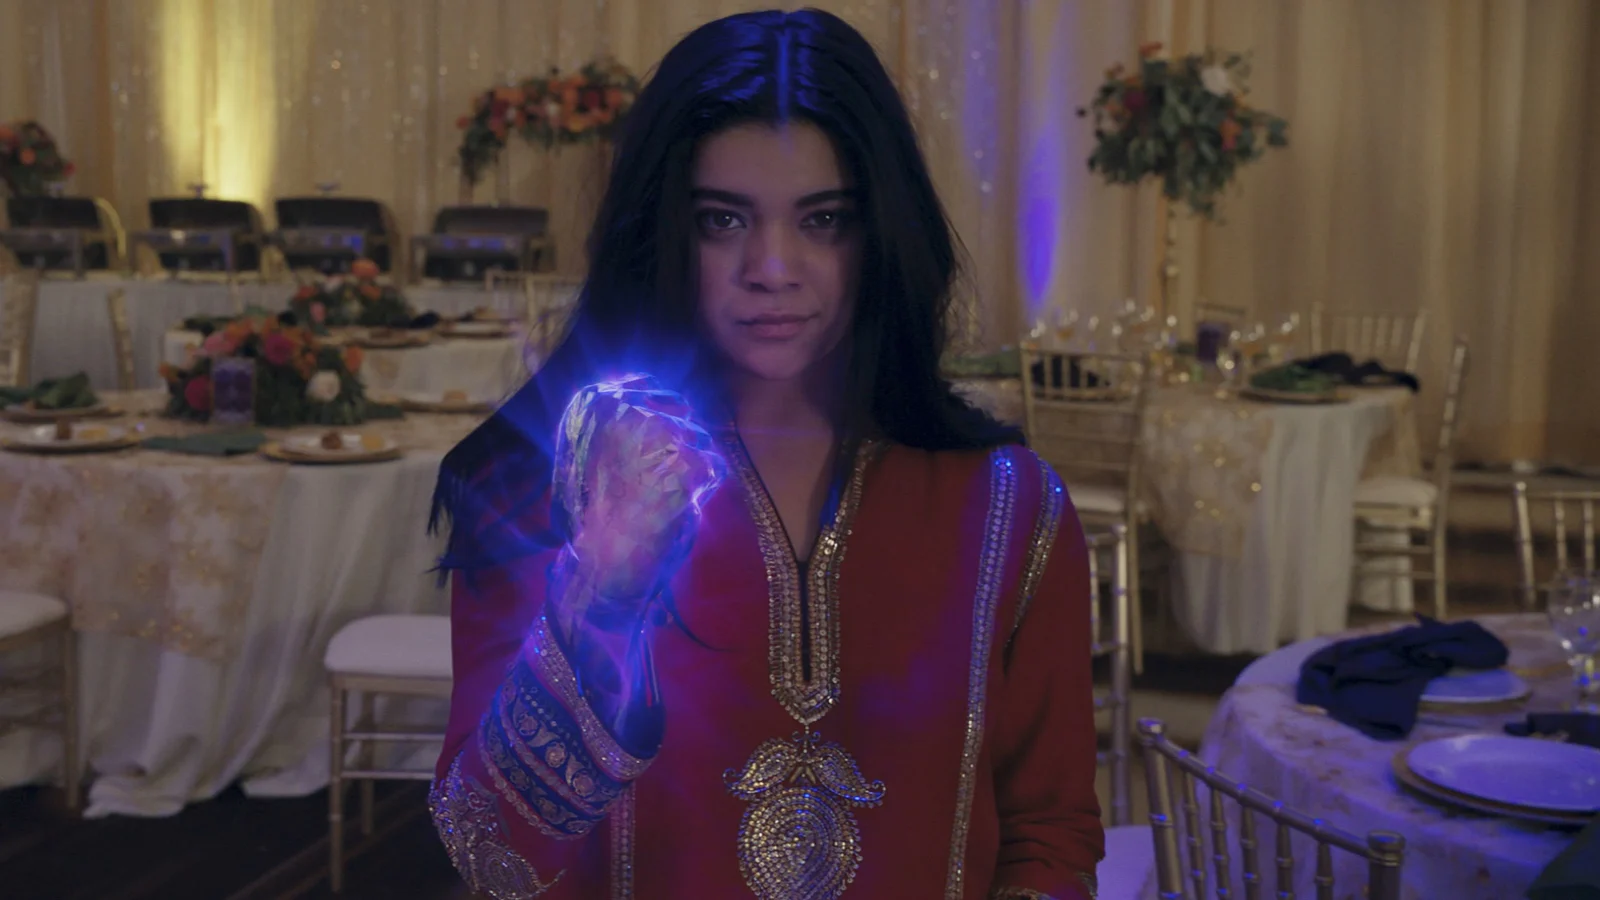 Kamala smirks with her glowing purple fist